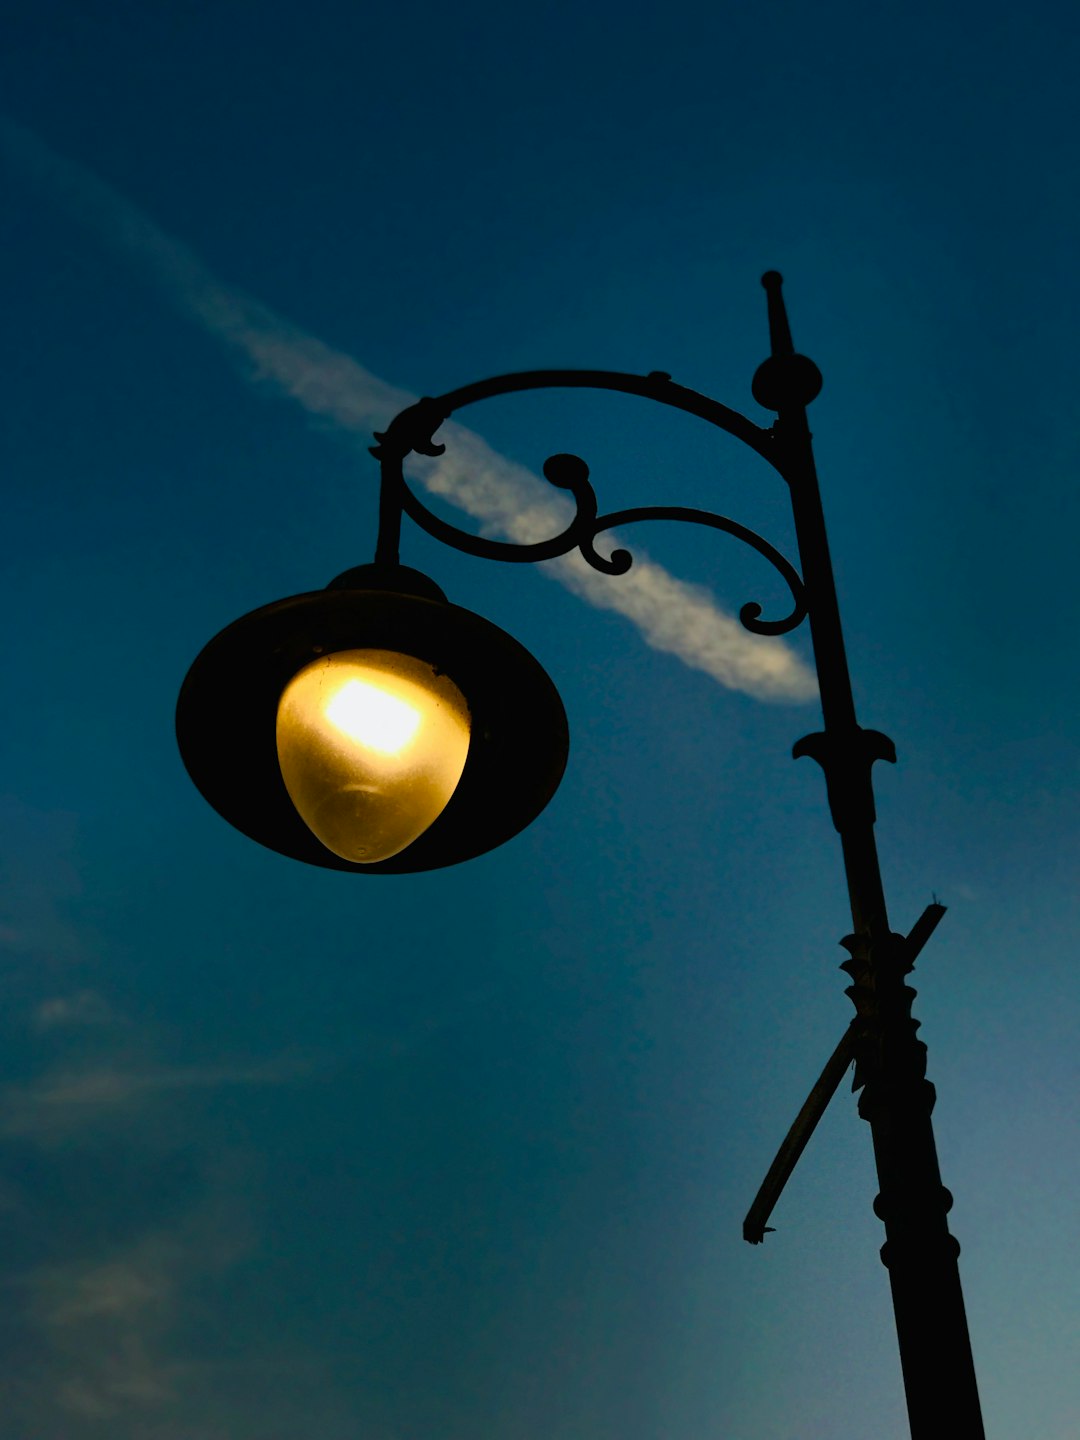 black lamppost photo – Free Lamp post Image on Unsplash